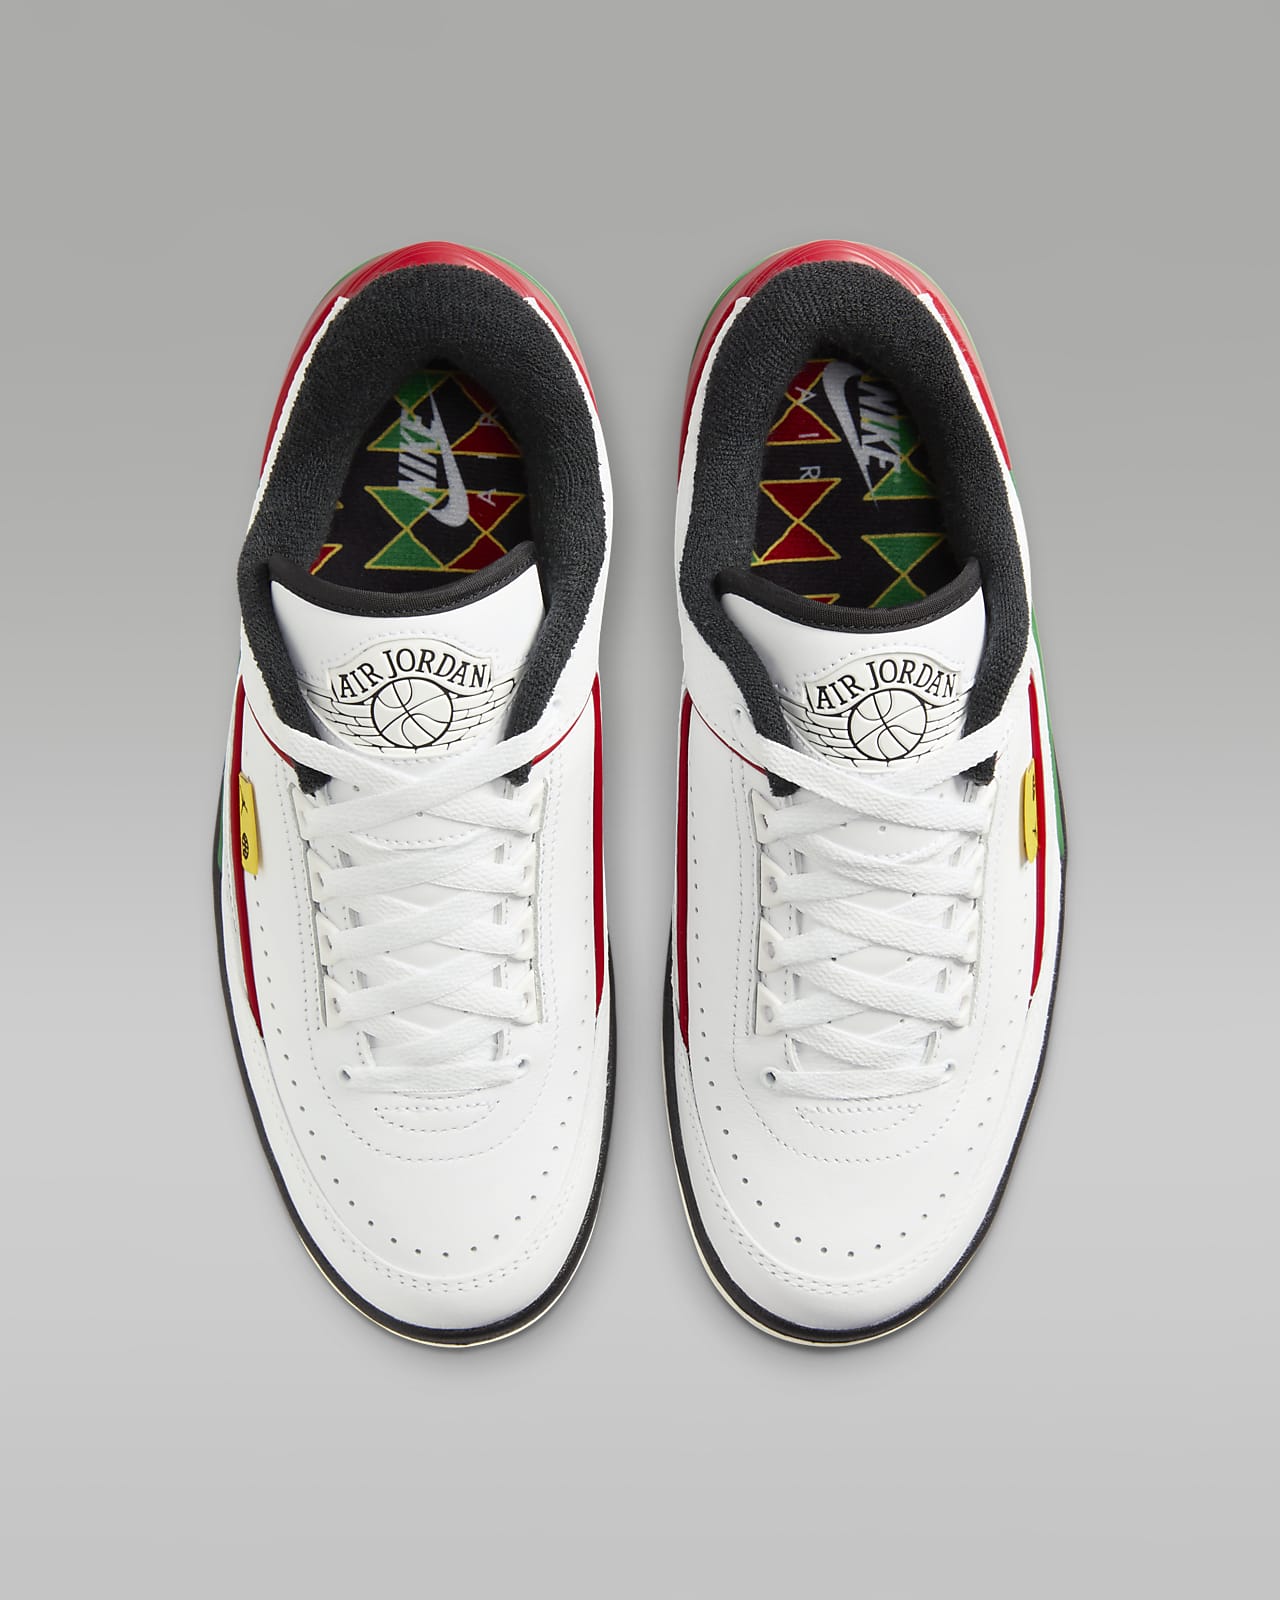 Air Jordan 2 Retro Low Quai 54 Men's Shoes